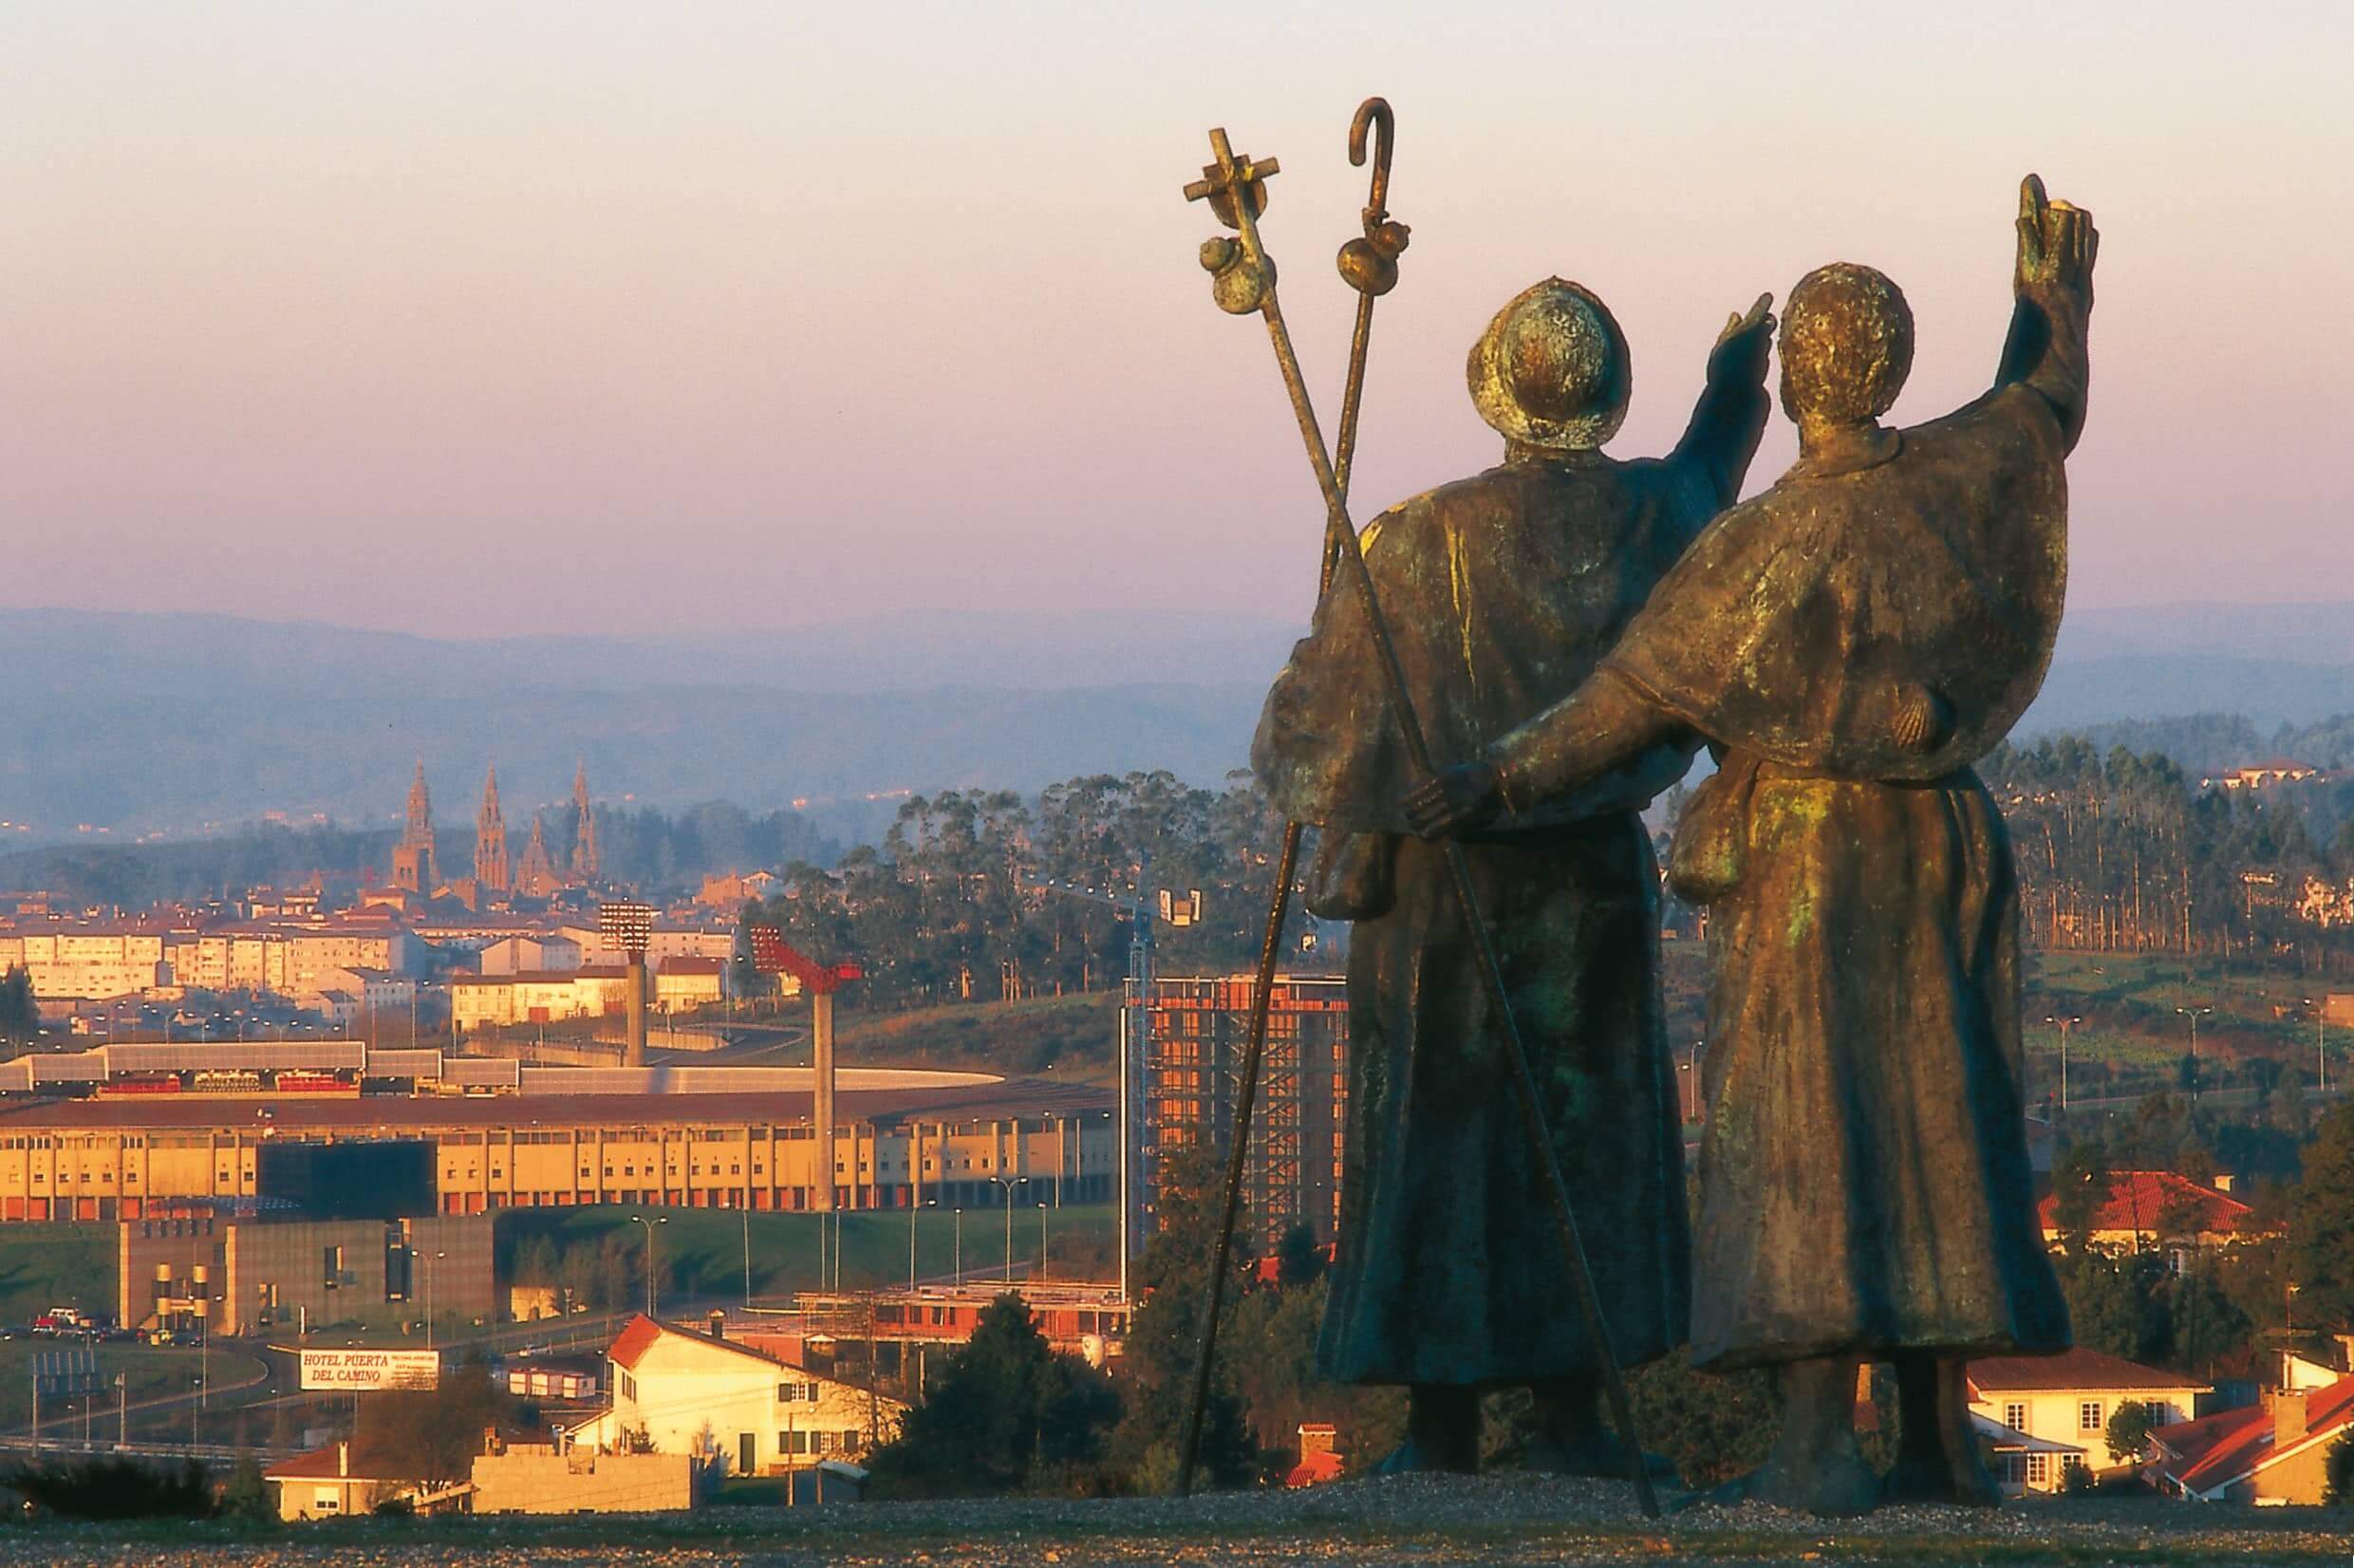 Vista de Santiago de Compostela